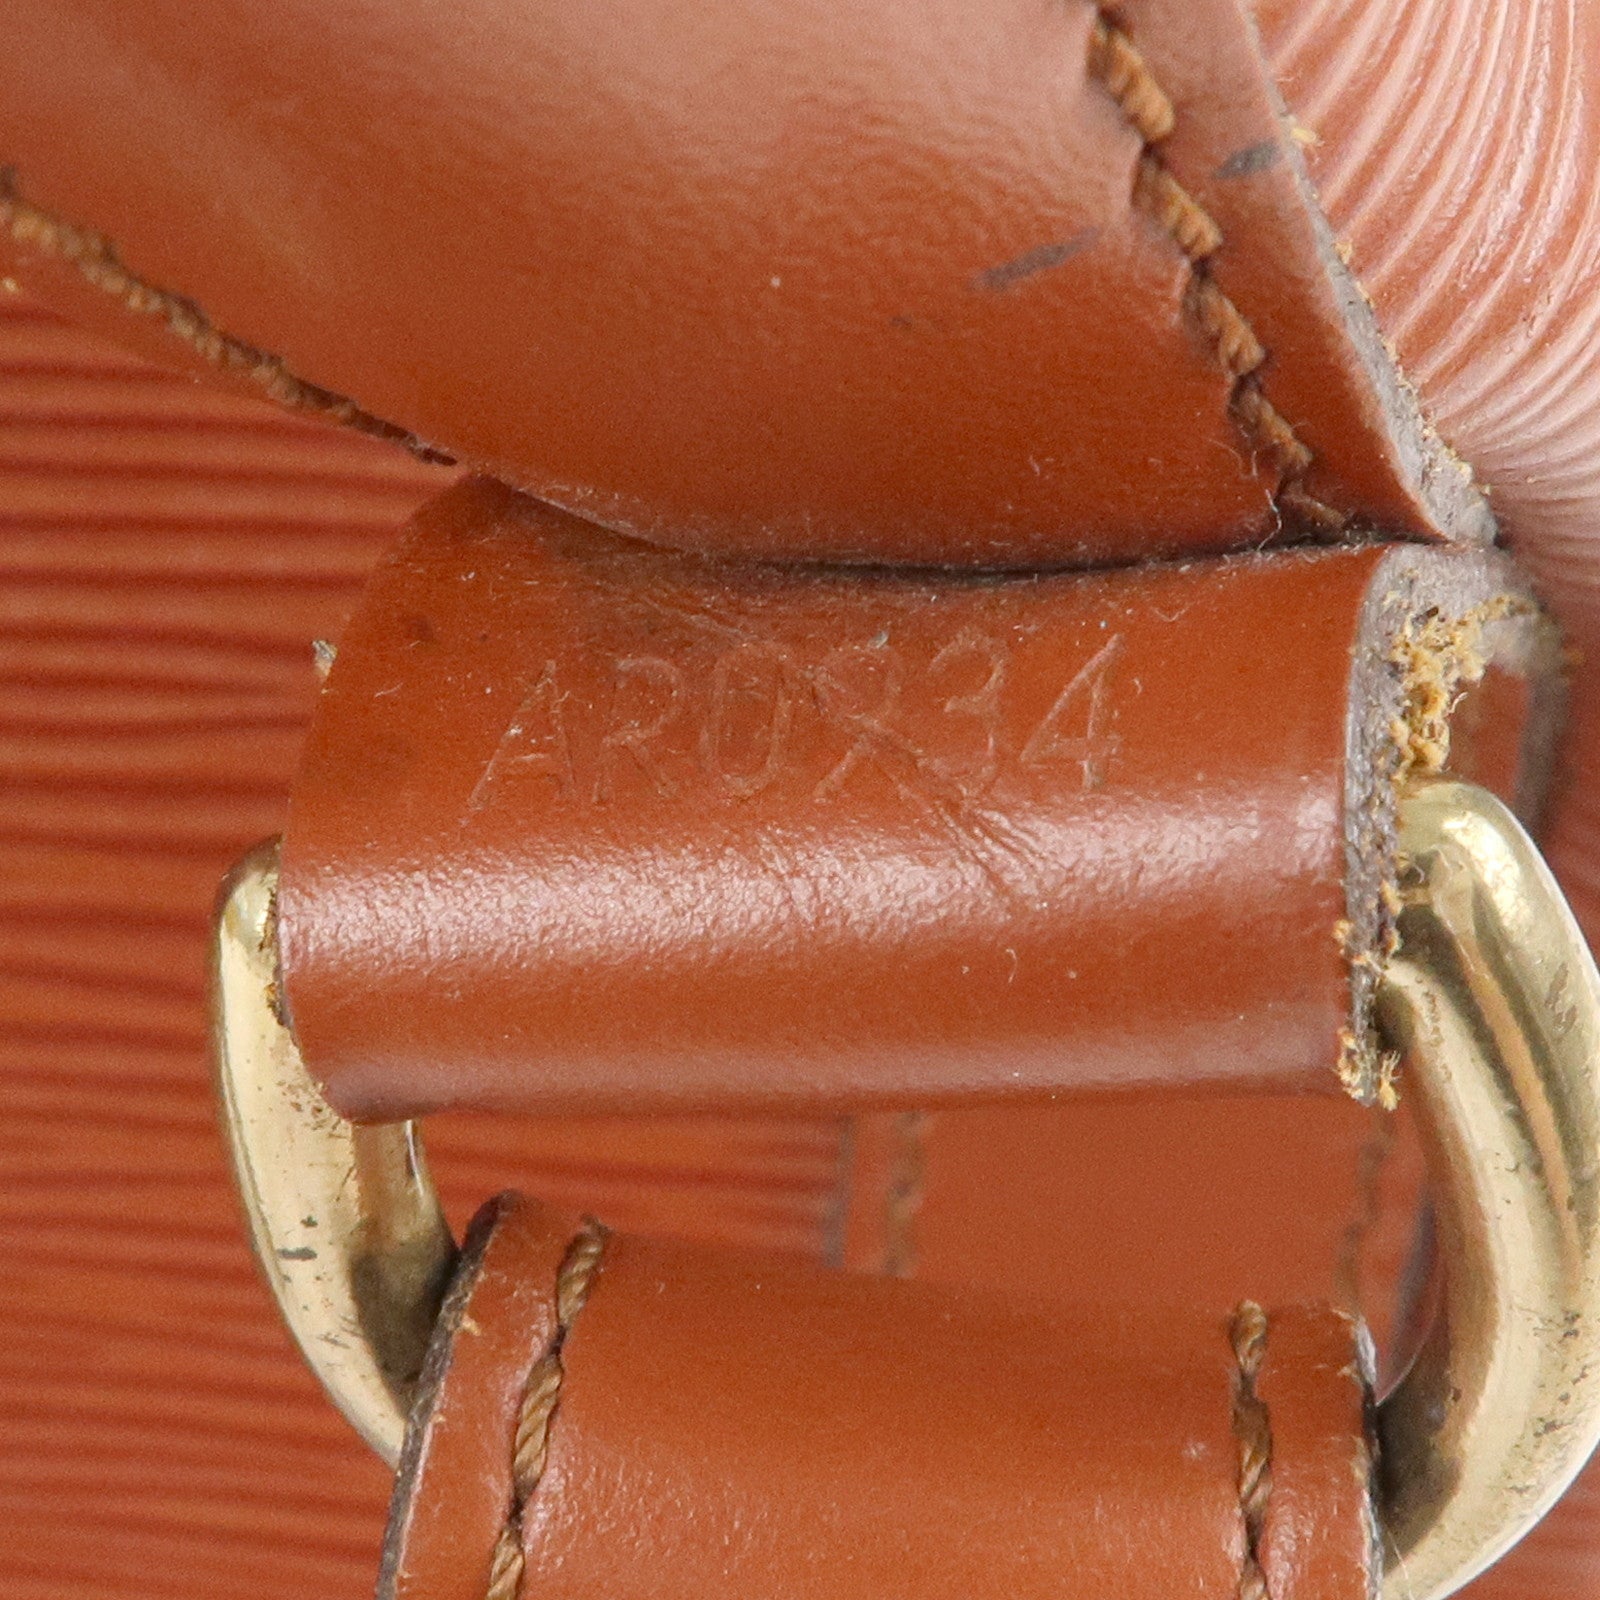 Noé cloth handbag Louis Vuitton Brown in Cloth - 31327668